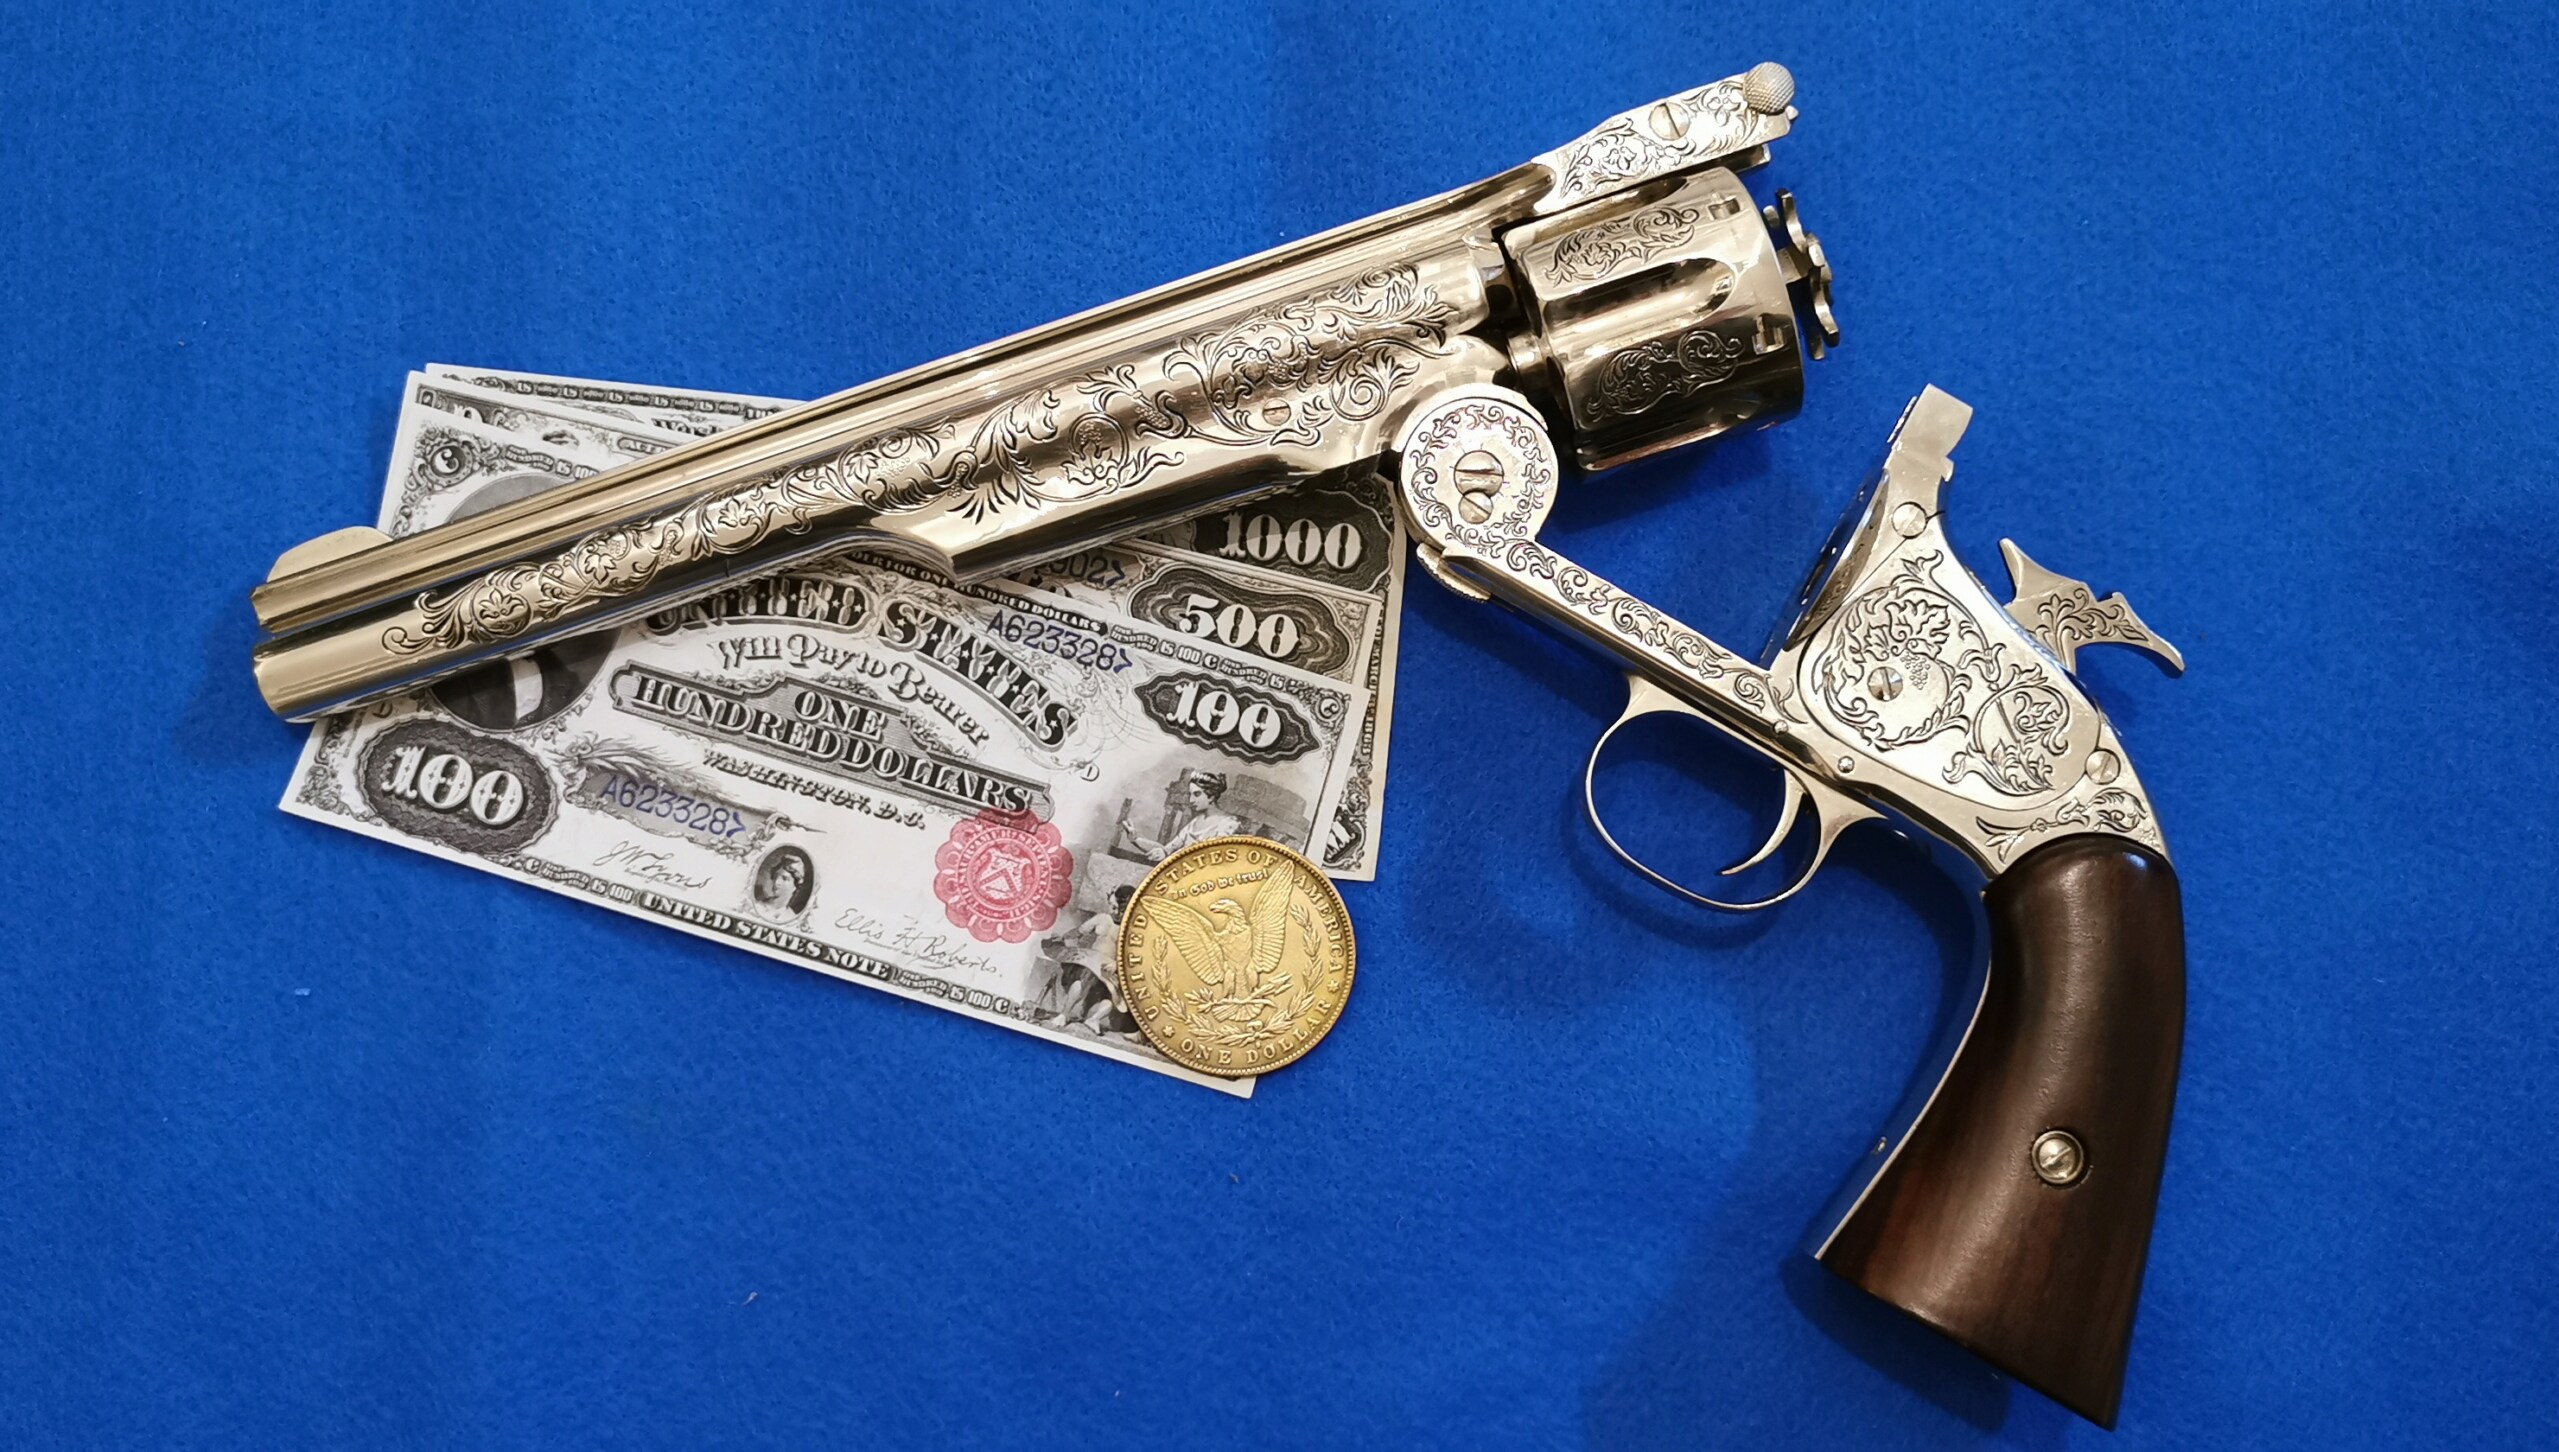 Smith & Wesson N°3 "Wyatt Earp" - Franklin Mint (MARUSHIN) Img_1470